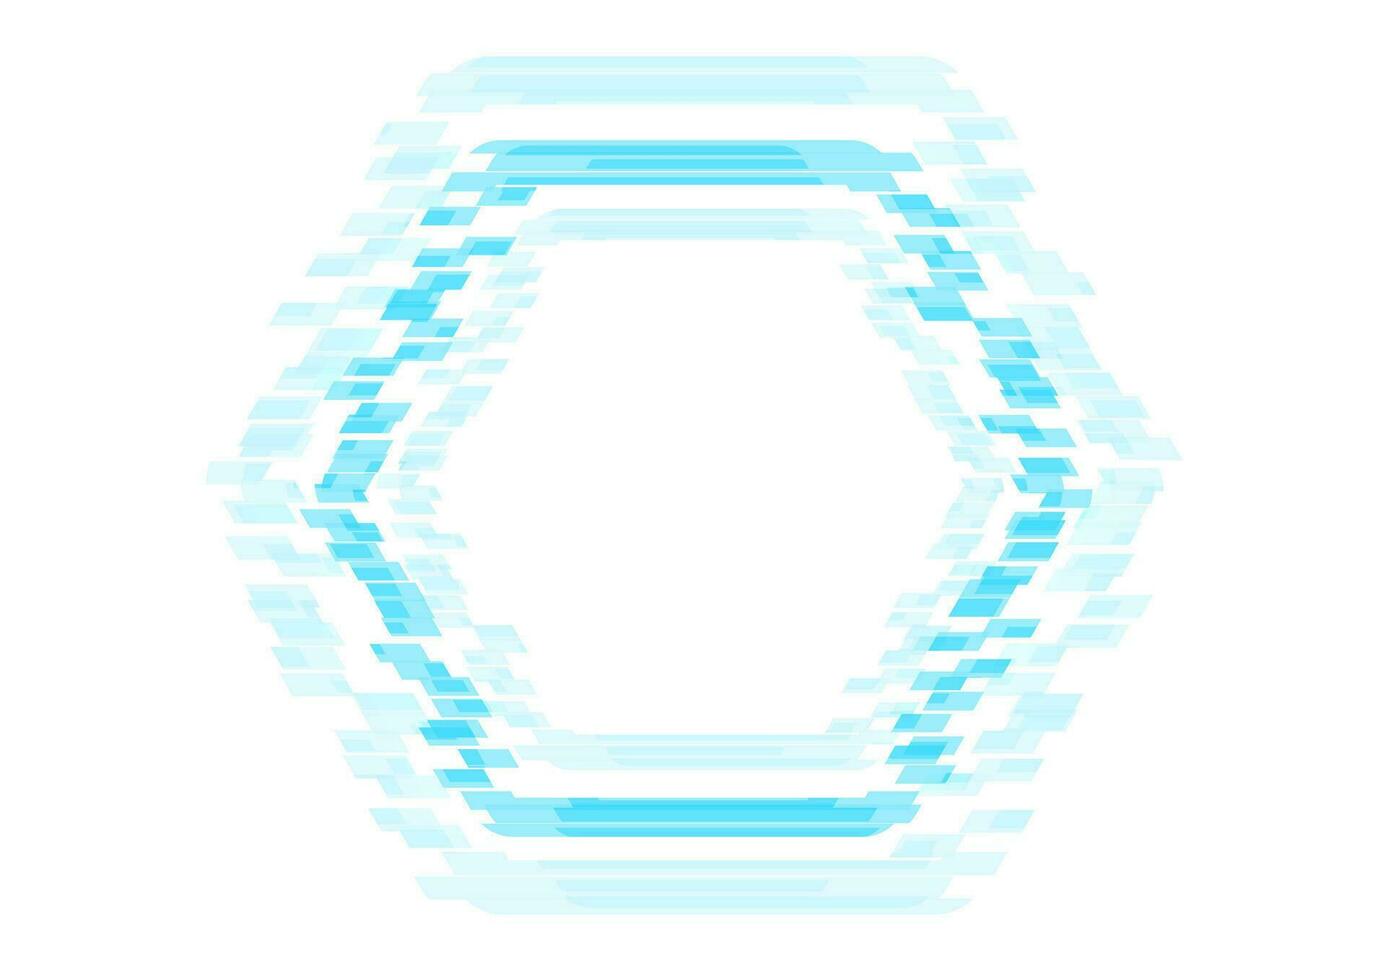 Abstract glitch effect blue grunge hexagon background vector